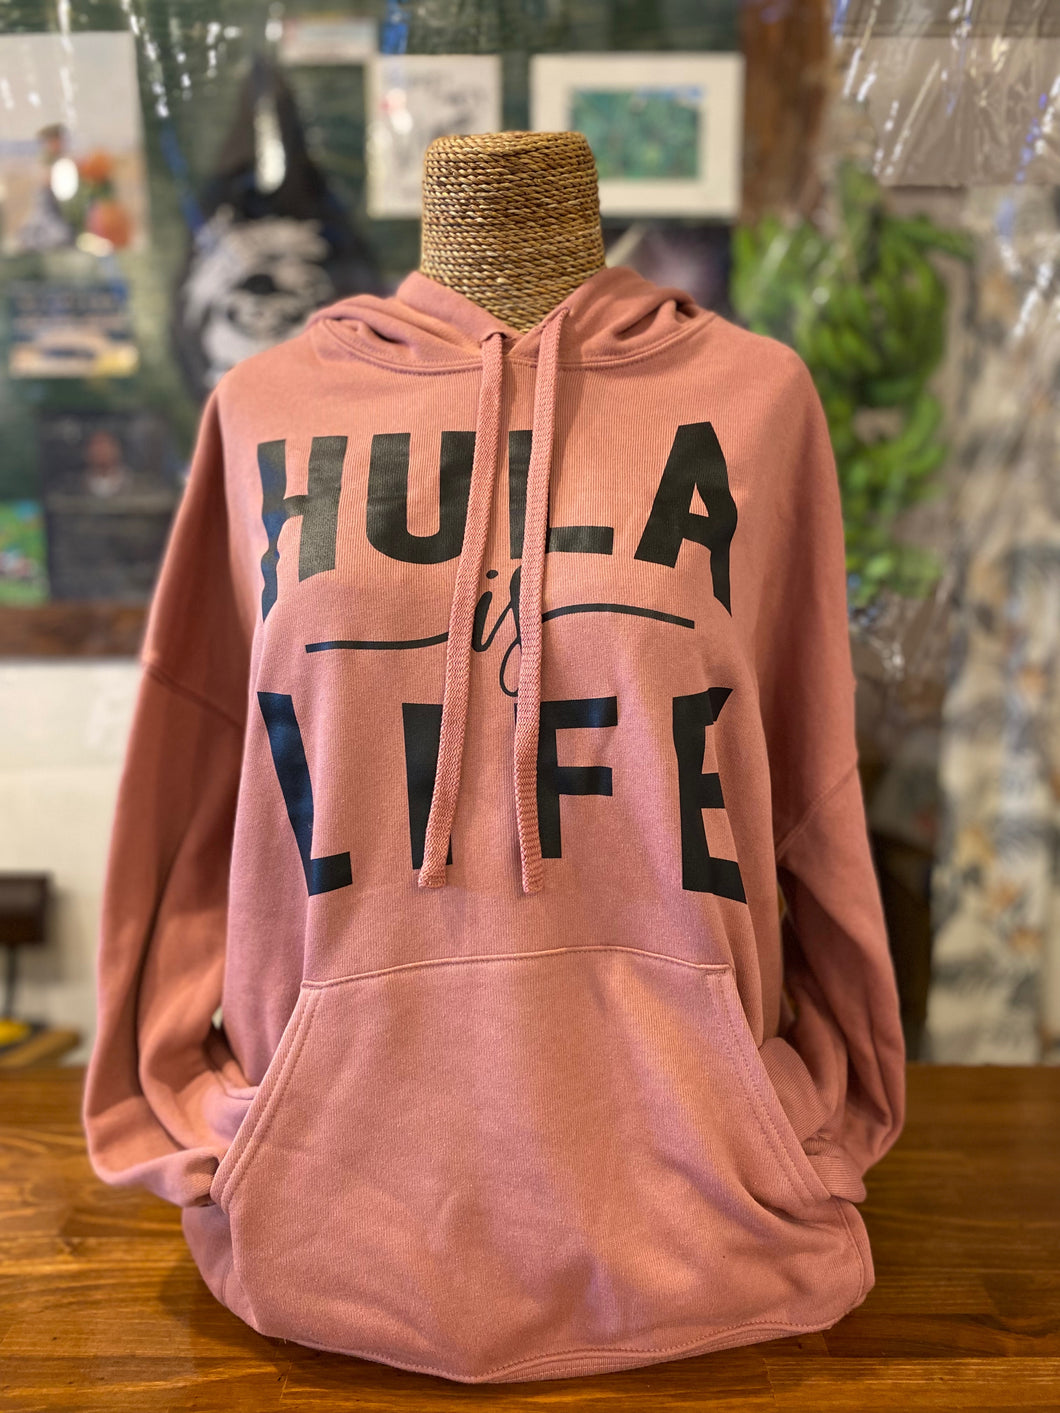 Hula is Life HugeパーカーLサイズ